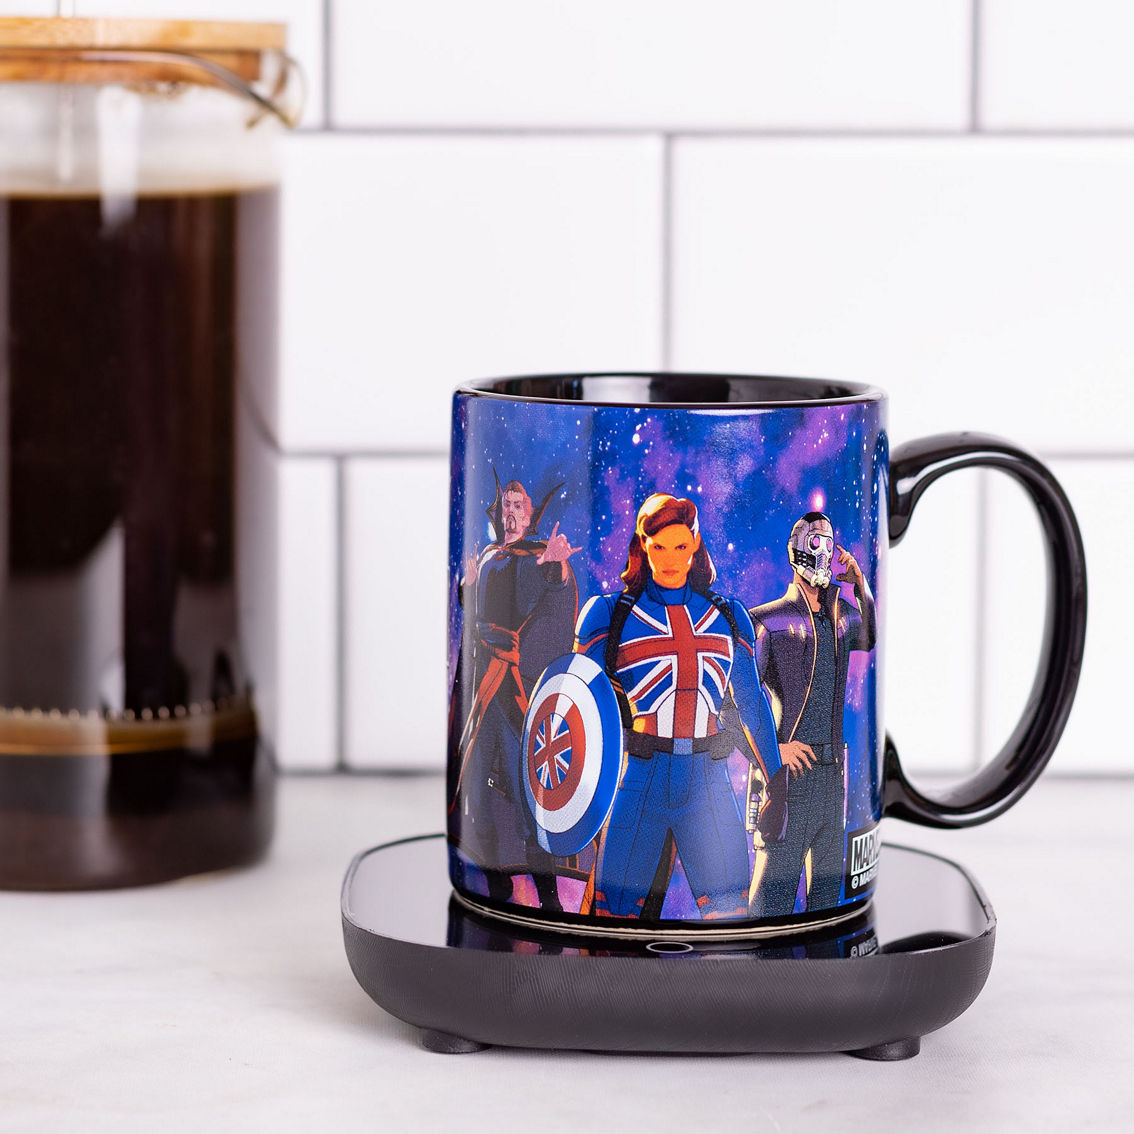 Uncanny Brands Marvel What If Mug Warmer with Mug - Image 8 of 10